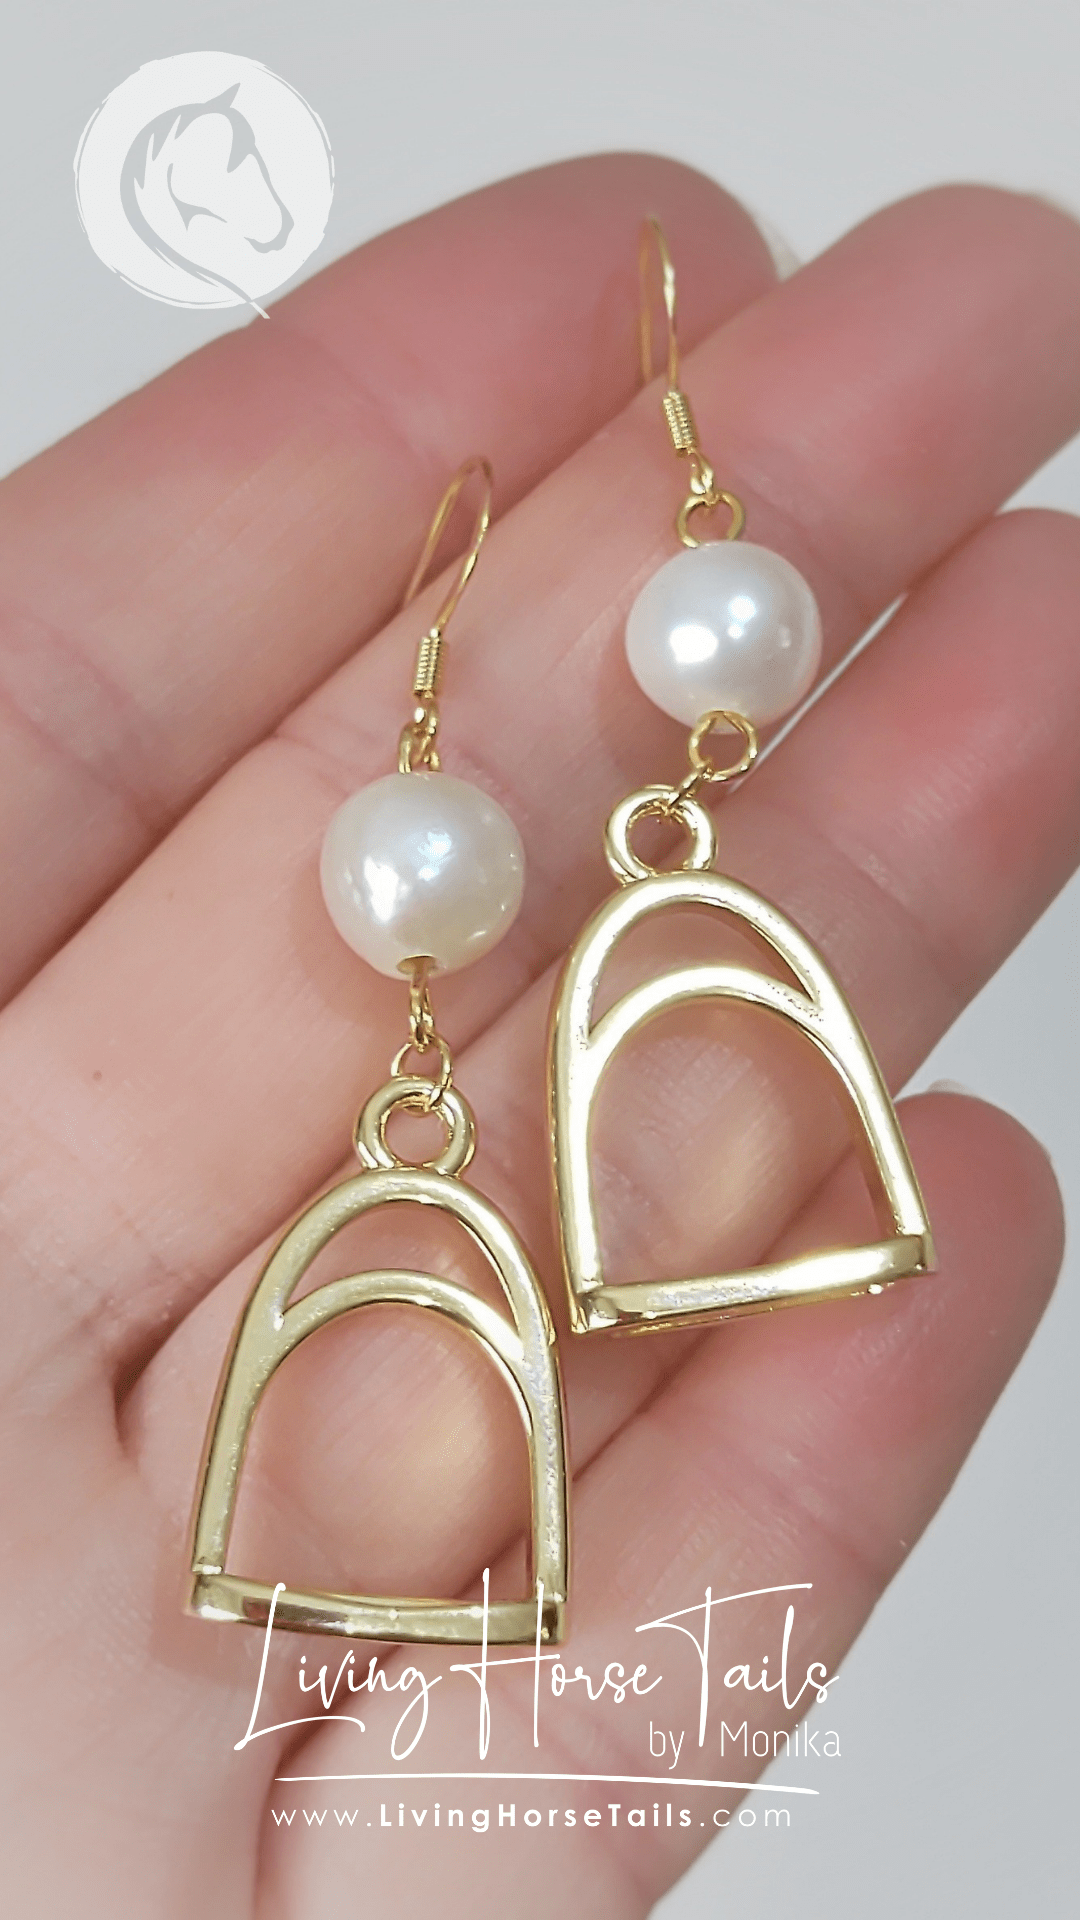 Living Horse Tails Gold pearl stirrup earrings Custom jewellery Monika Australia horsehair keepsake